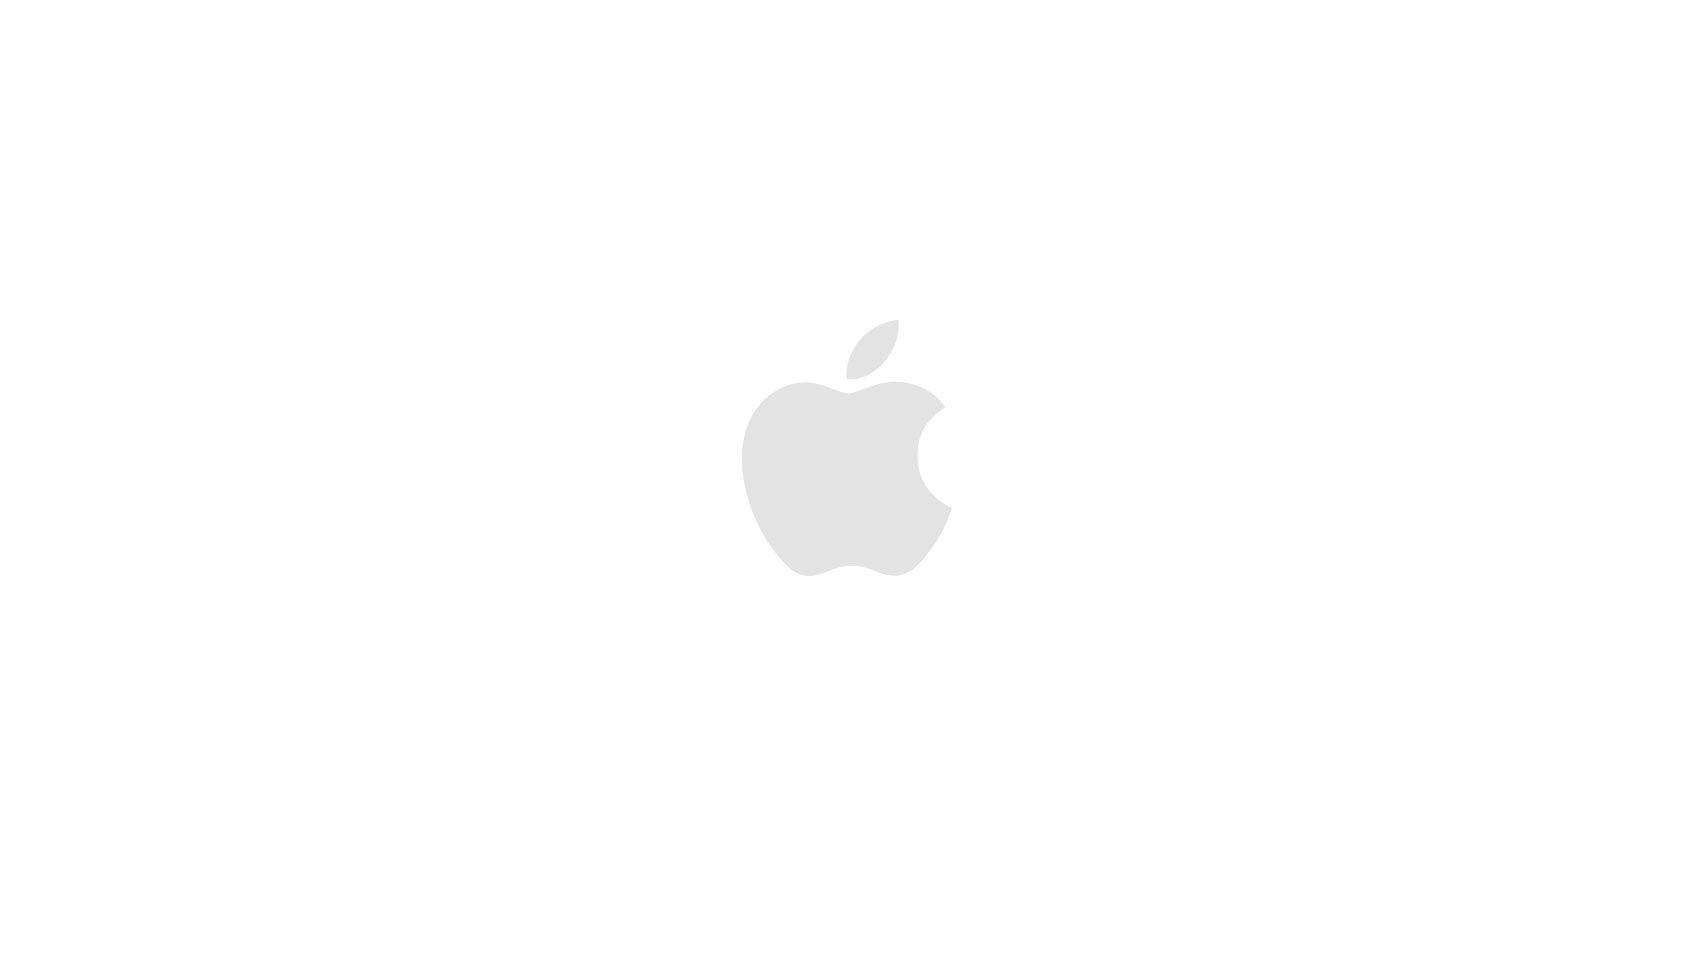 New 2016 Small Apple Logo - Business - Apple